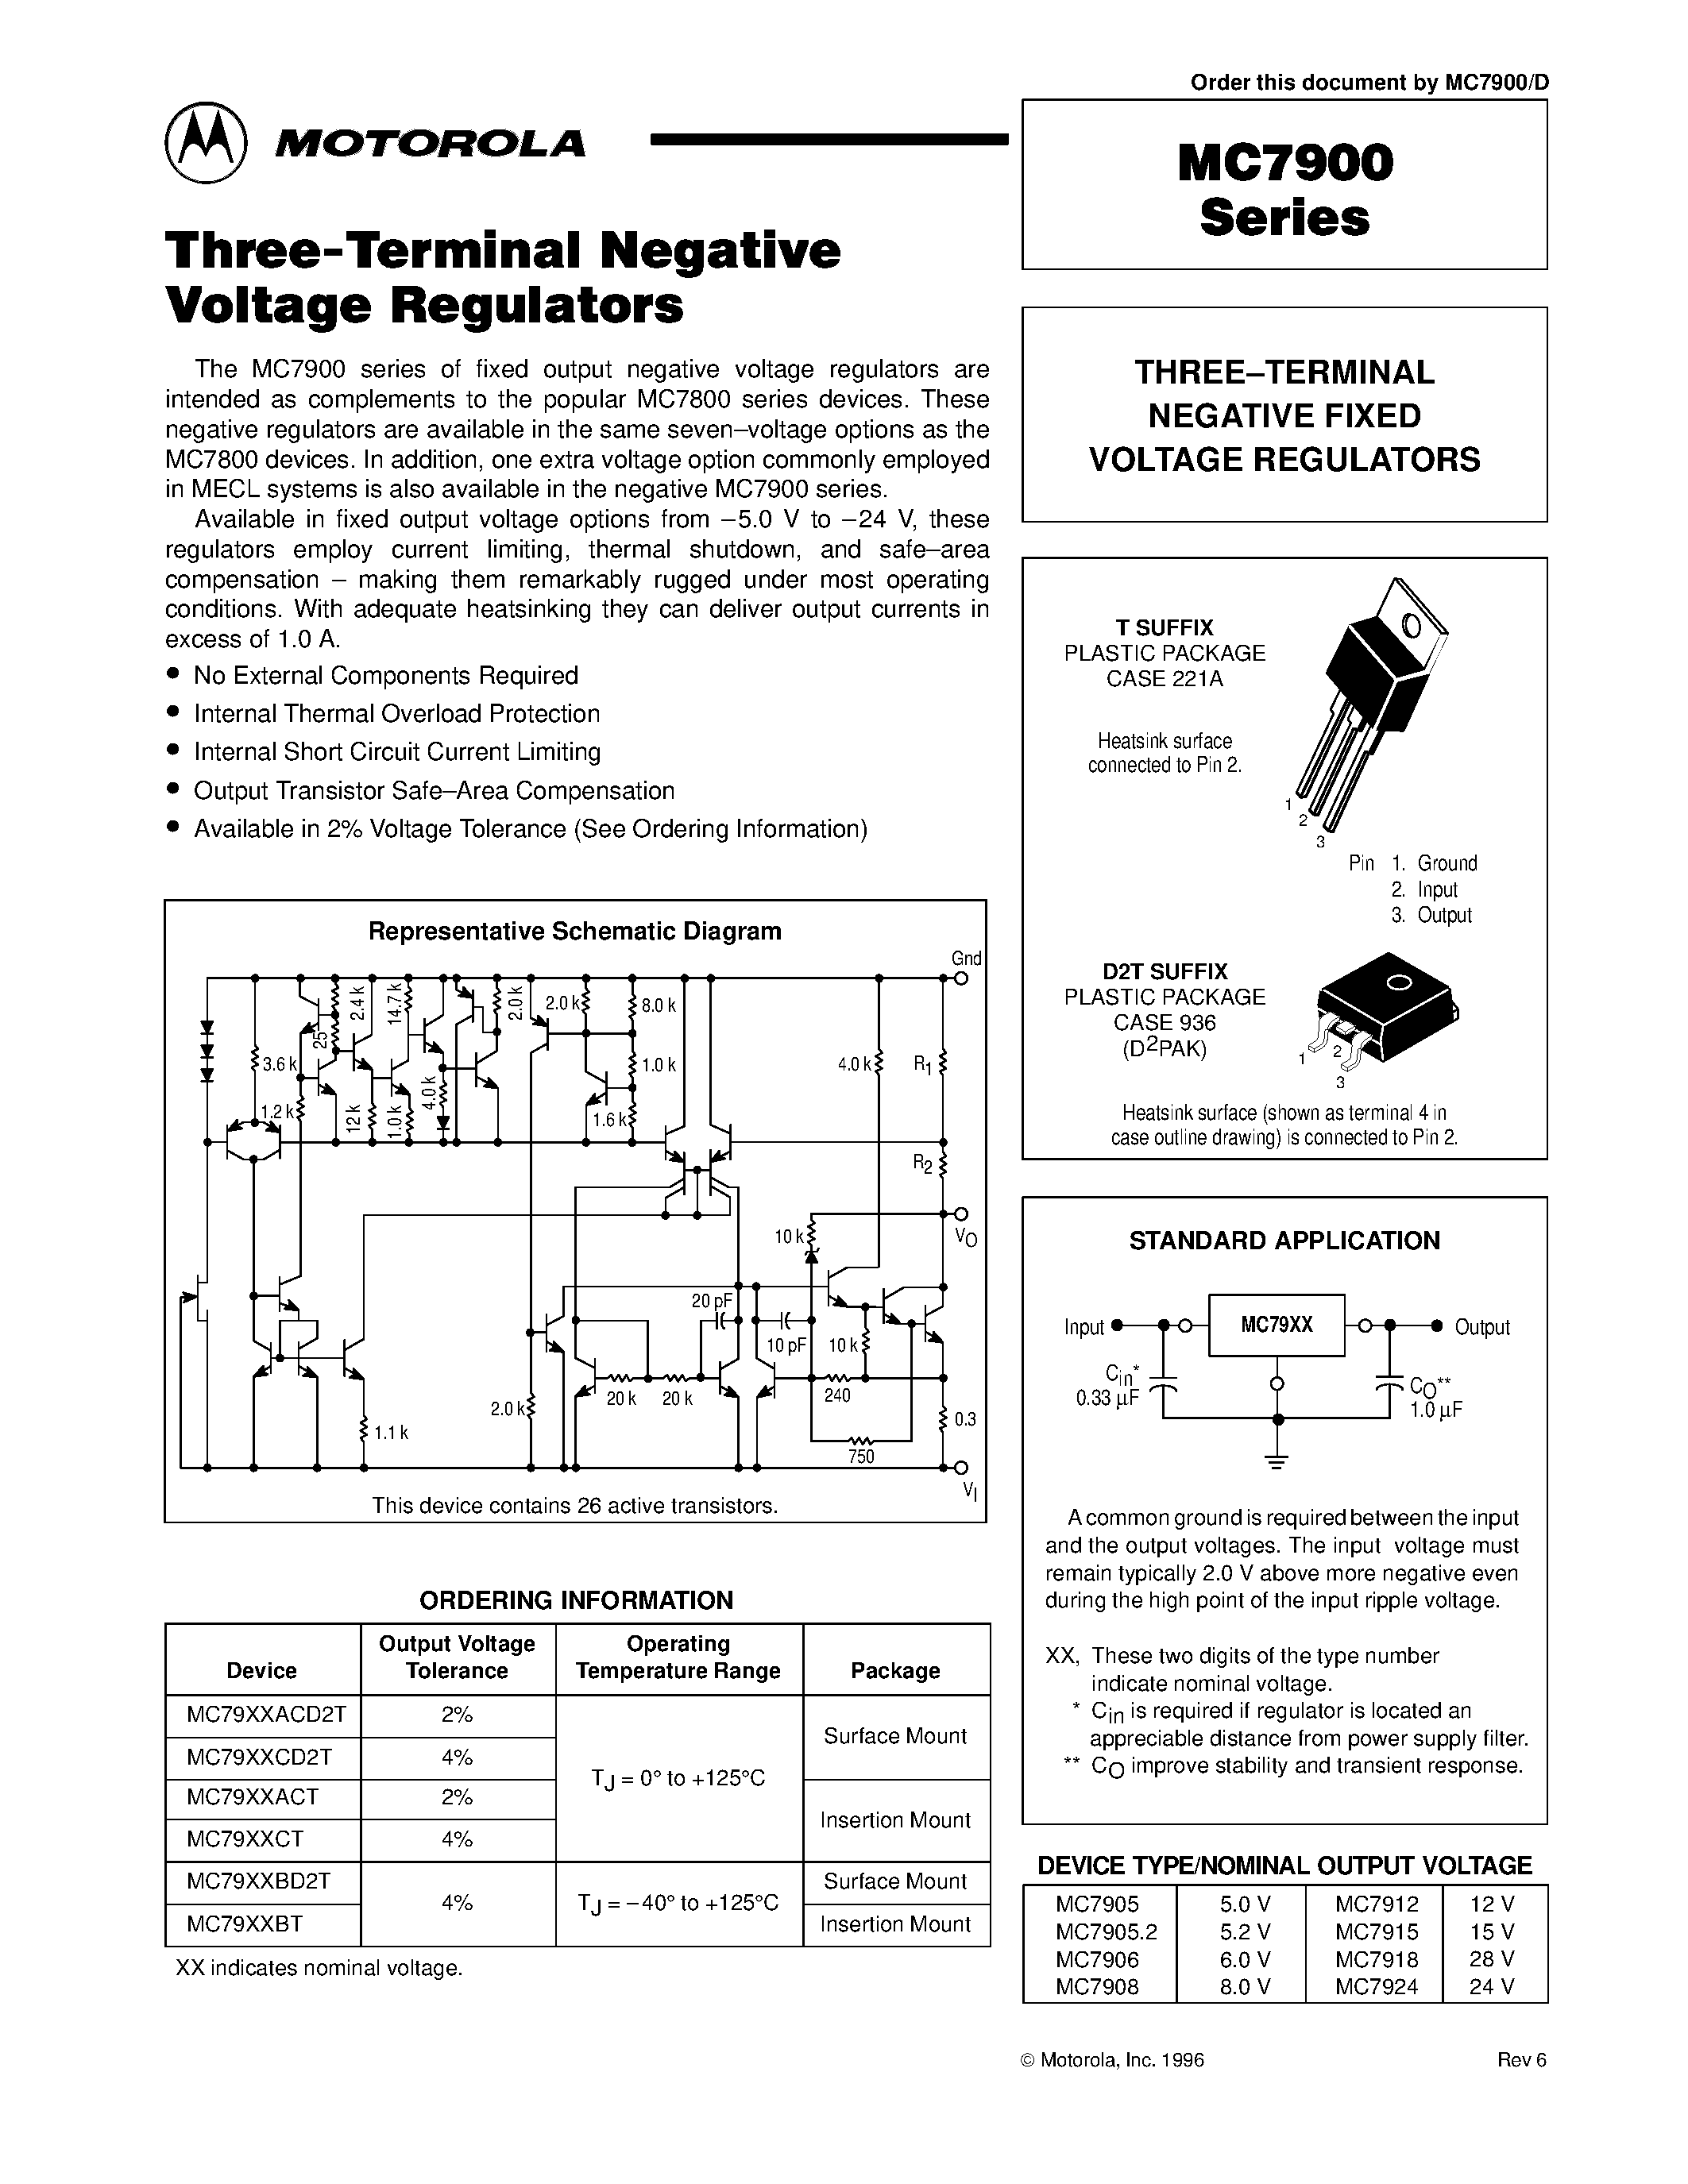 Datasheet MC7905BD2T - THREE-TERMINAL NEGATIVE FIXED VOLTAGE REGULATORS page 1